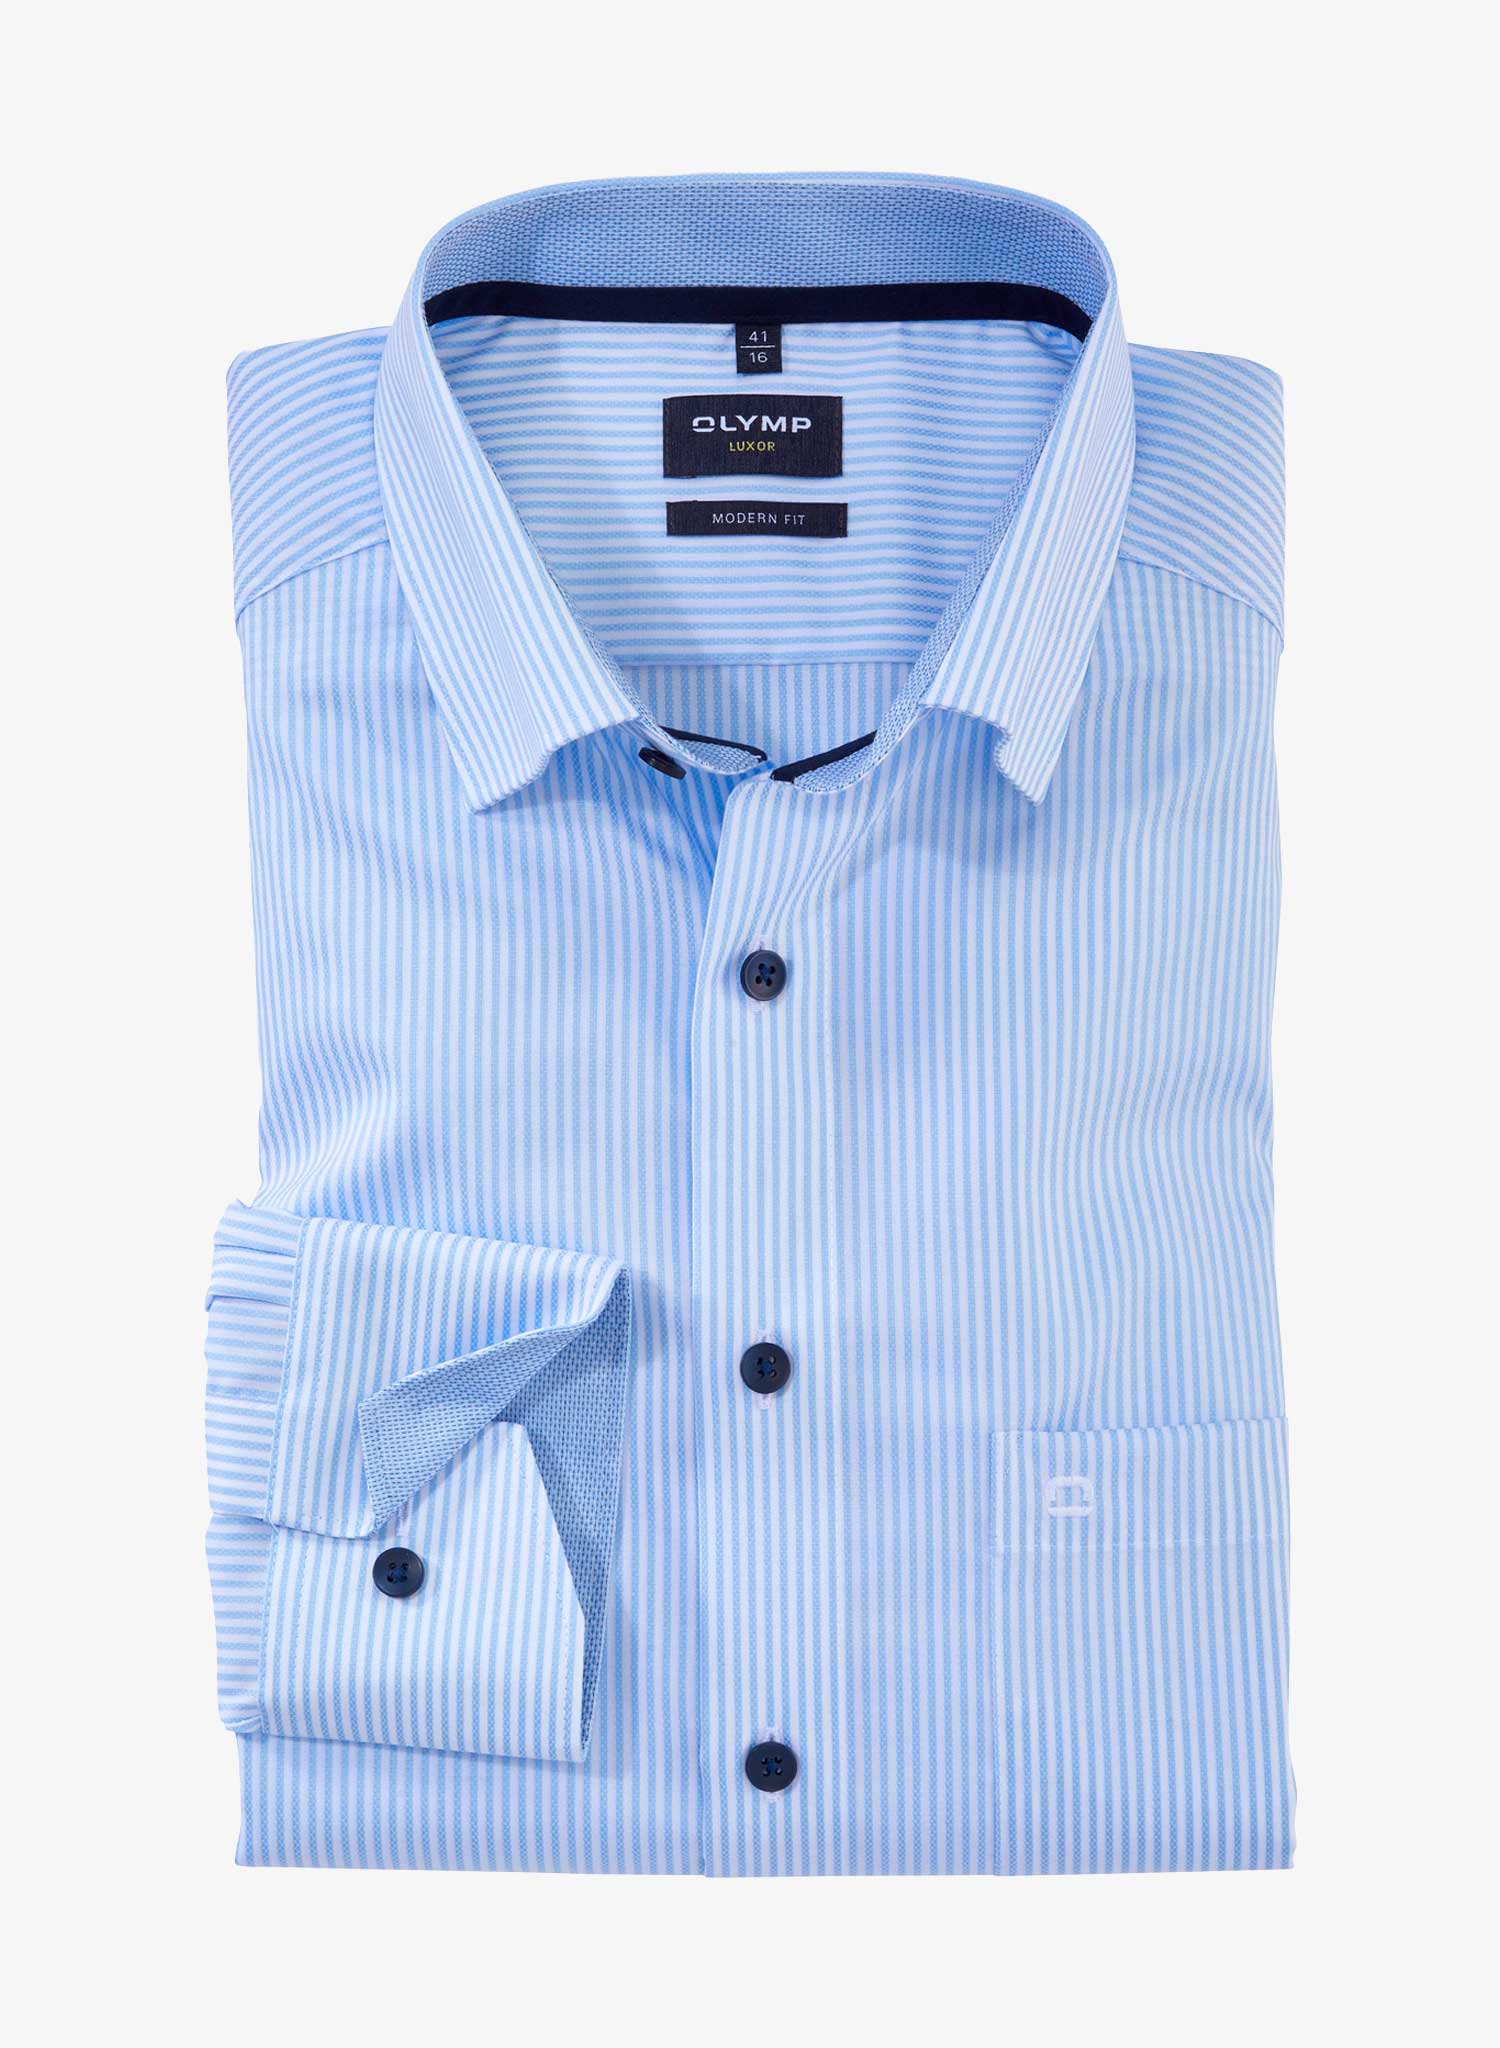 Olymp Luxor Light Stripe Modern Fit Long Sleeve Shirt Blue Folded Front